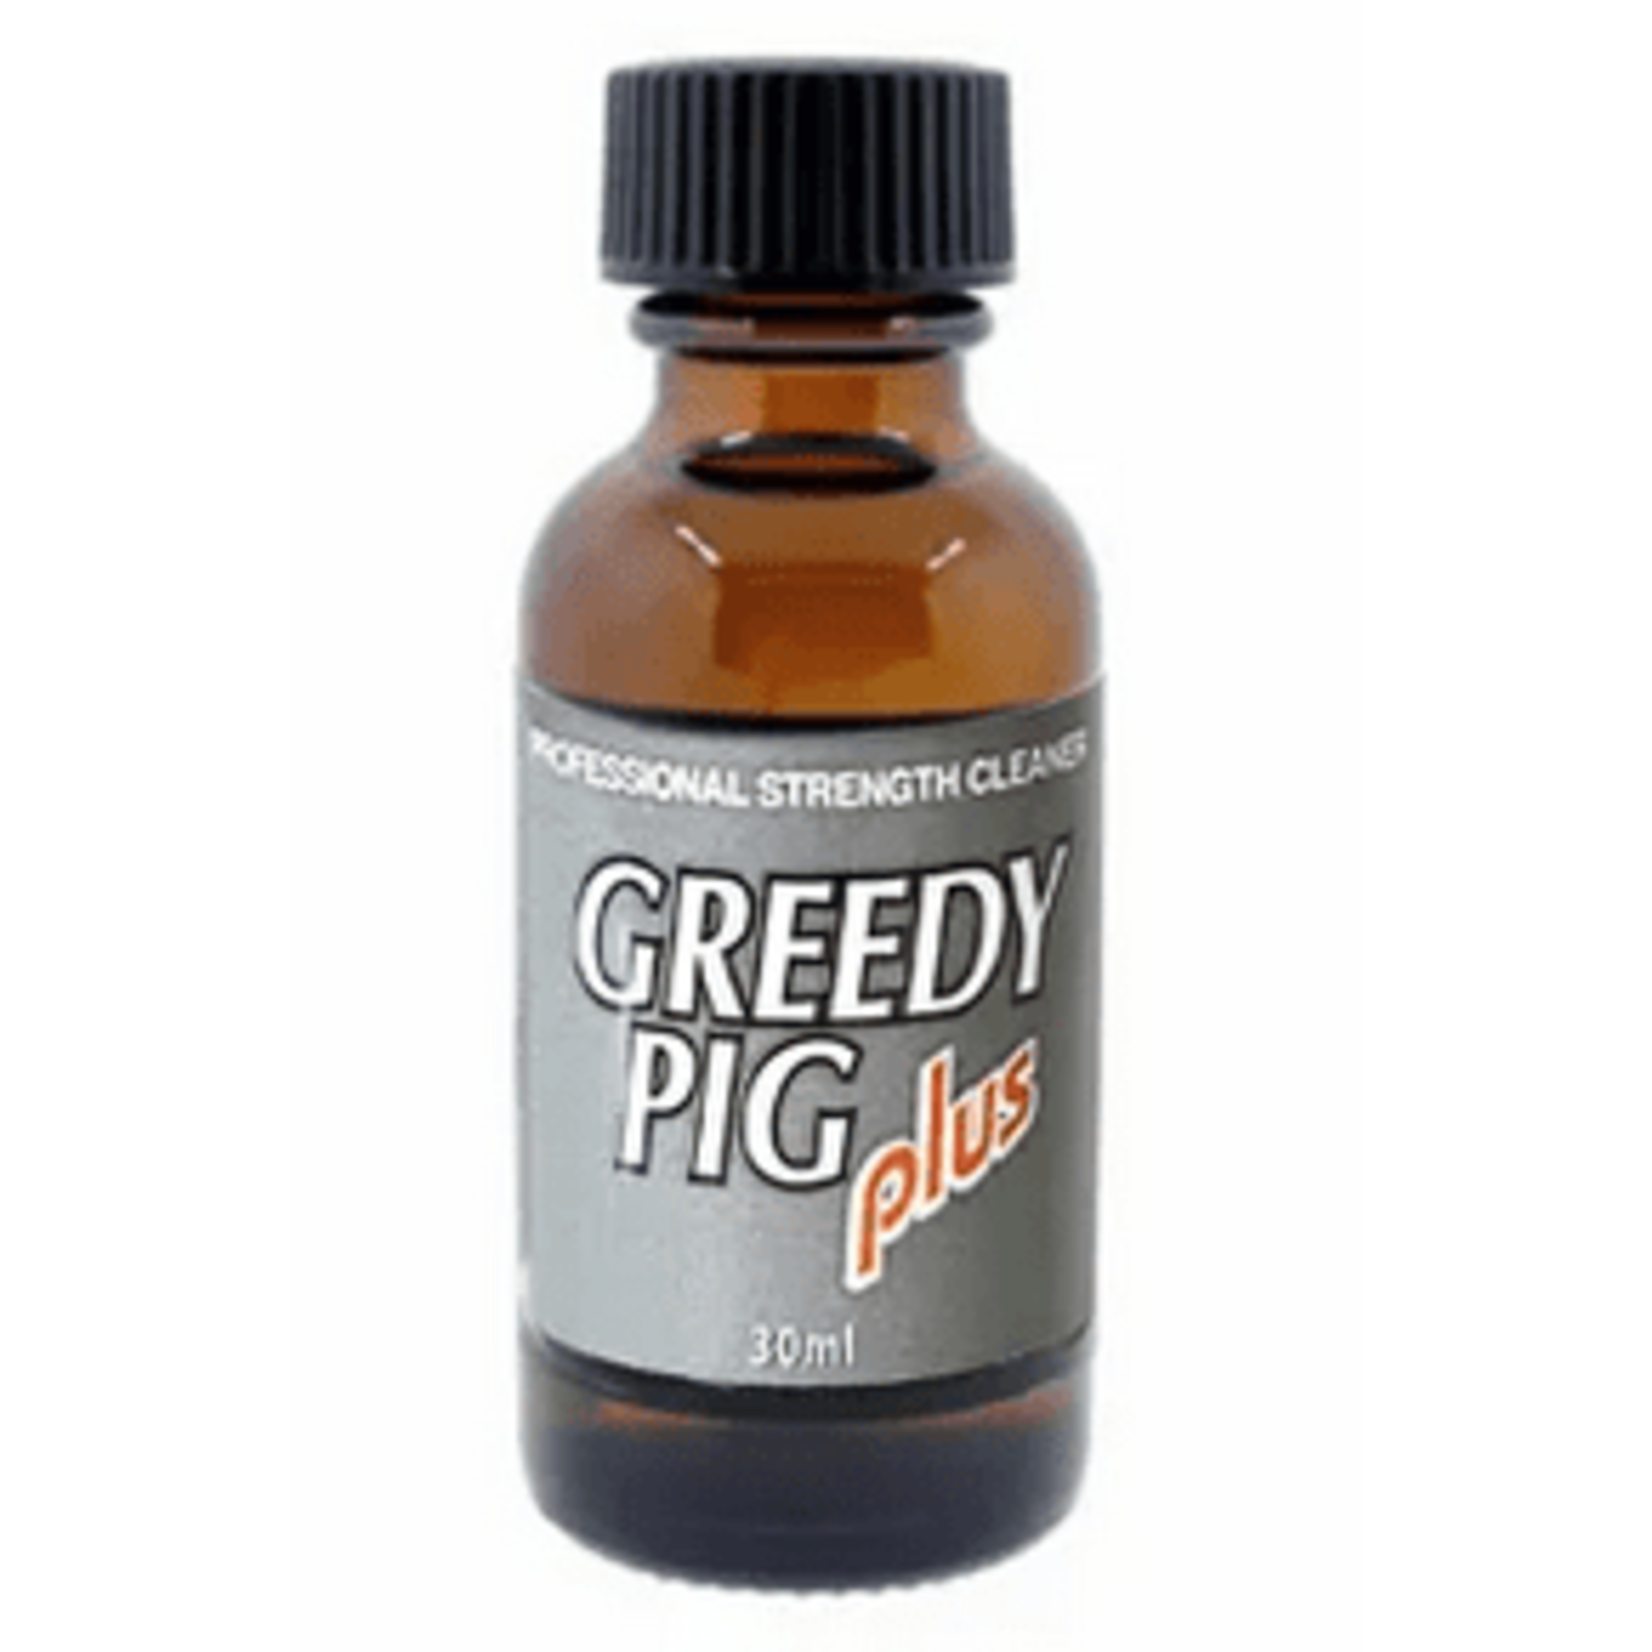 Greedy pig Greedy Pig Plus Leather Cleaner 30mL